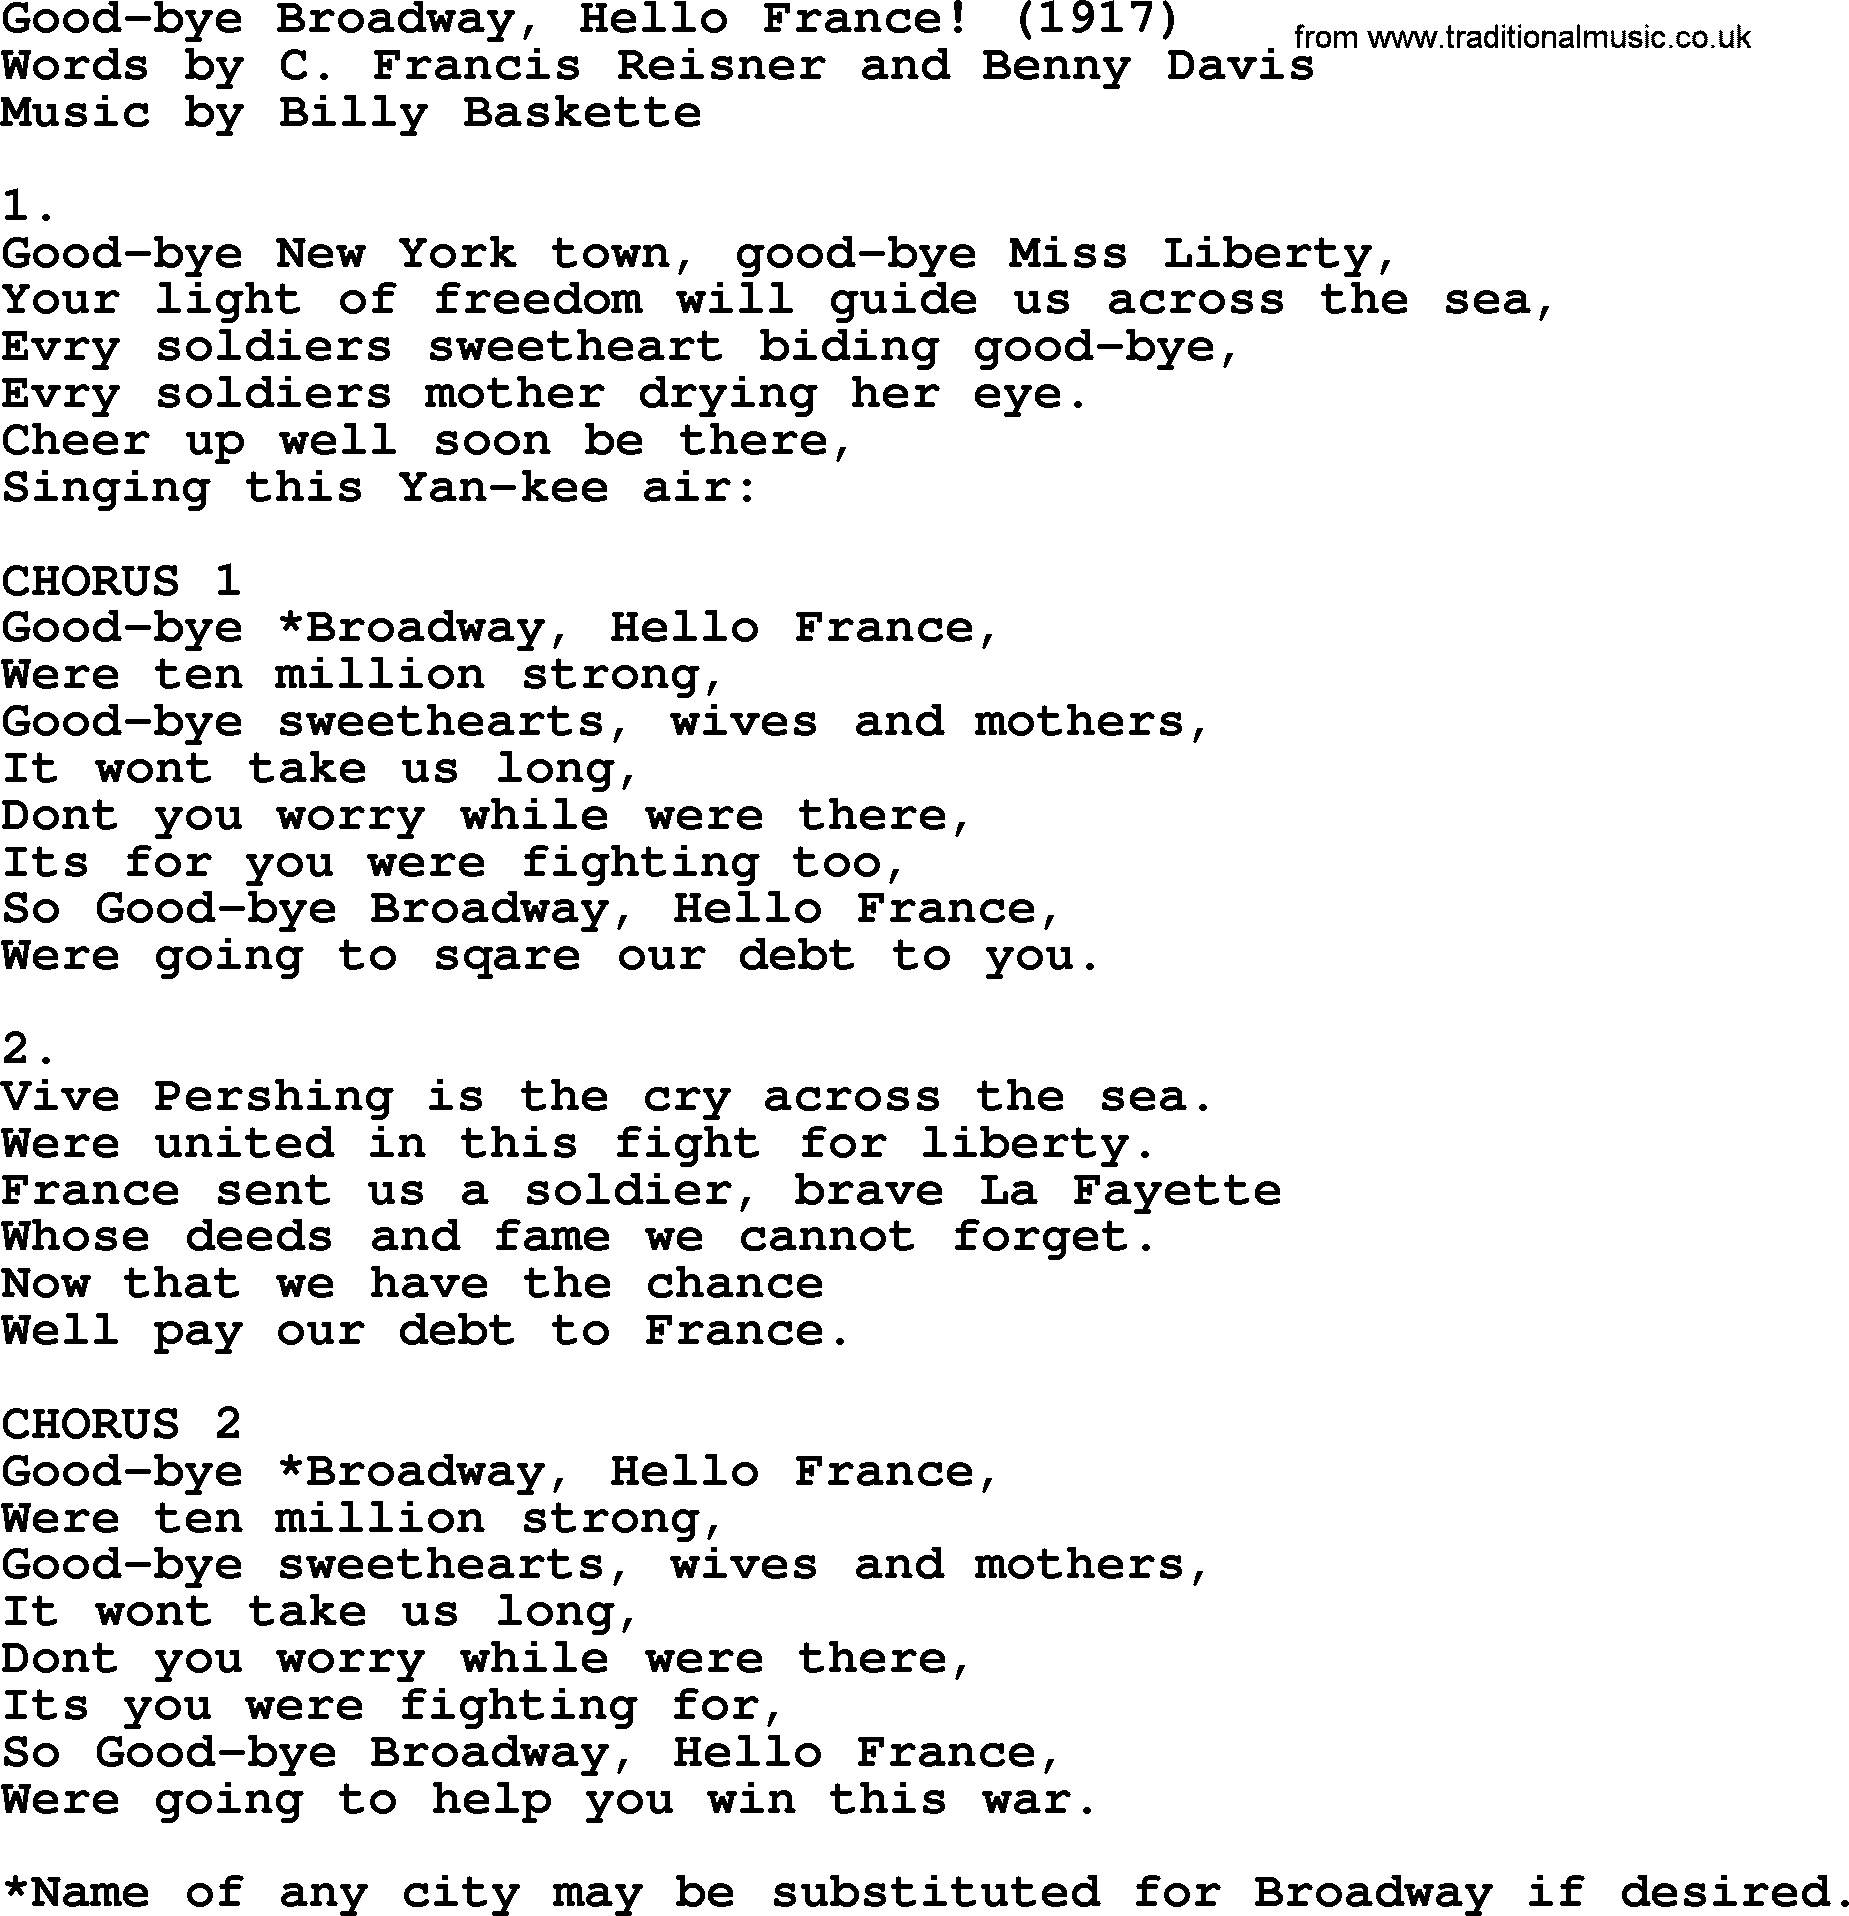 World War One Ww1 Era Song Lyrics For Good Bye Broadway Hello France 1917